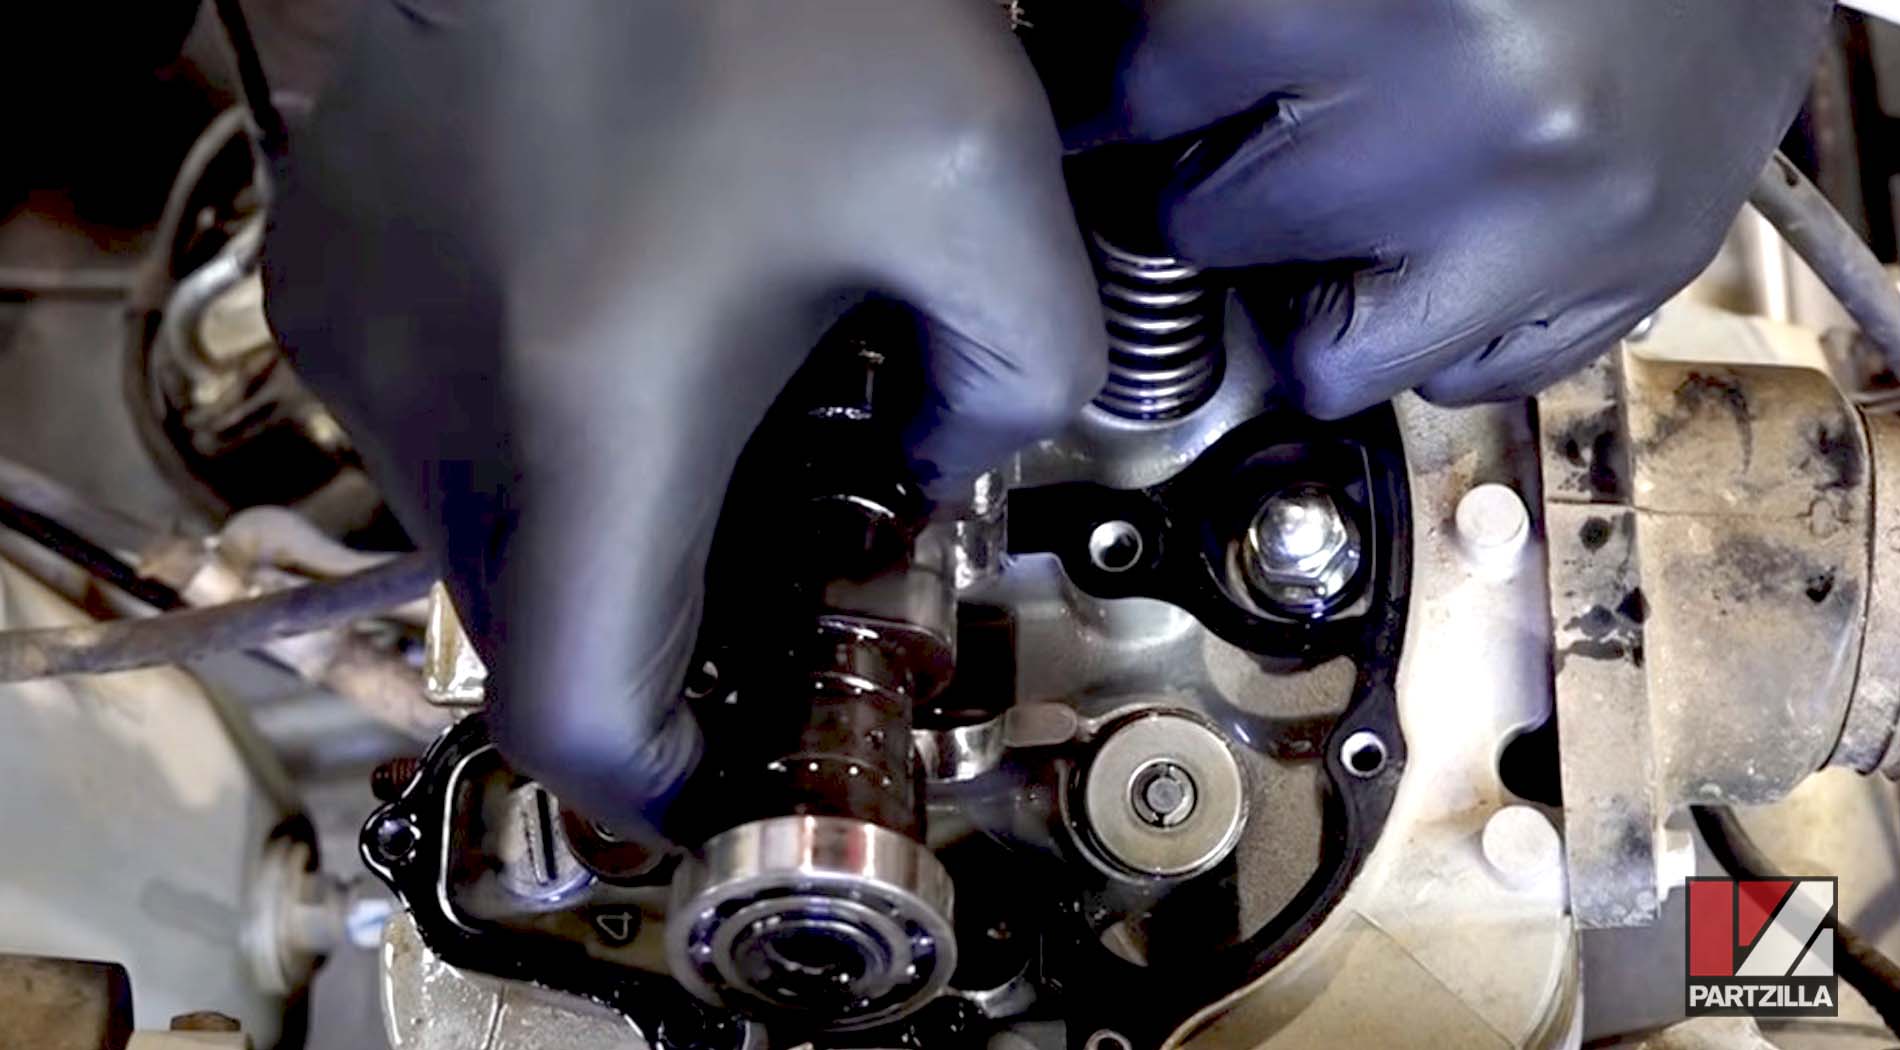 Honda TRX400 top end rebuild camshaft removal